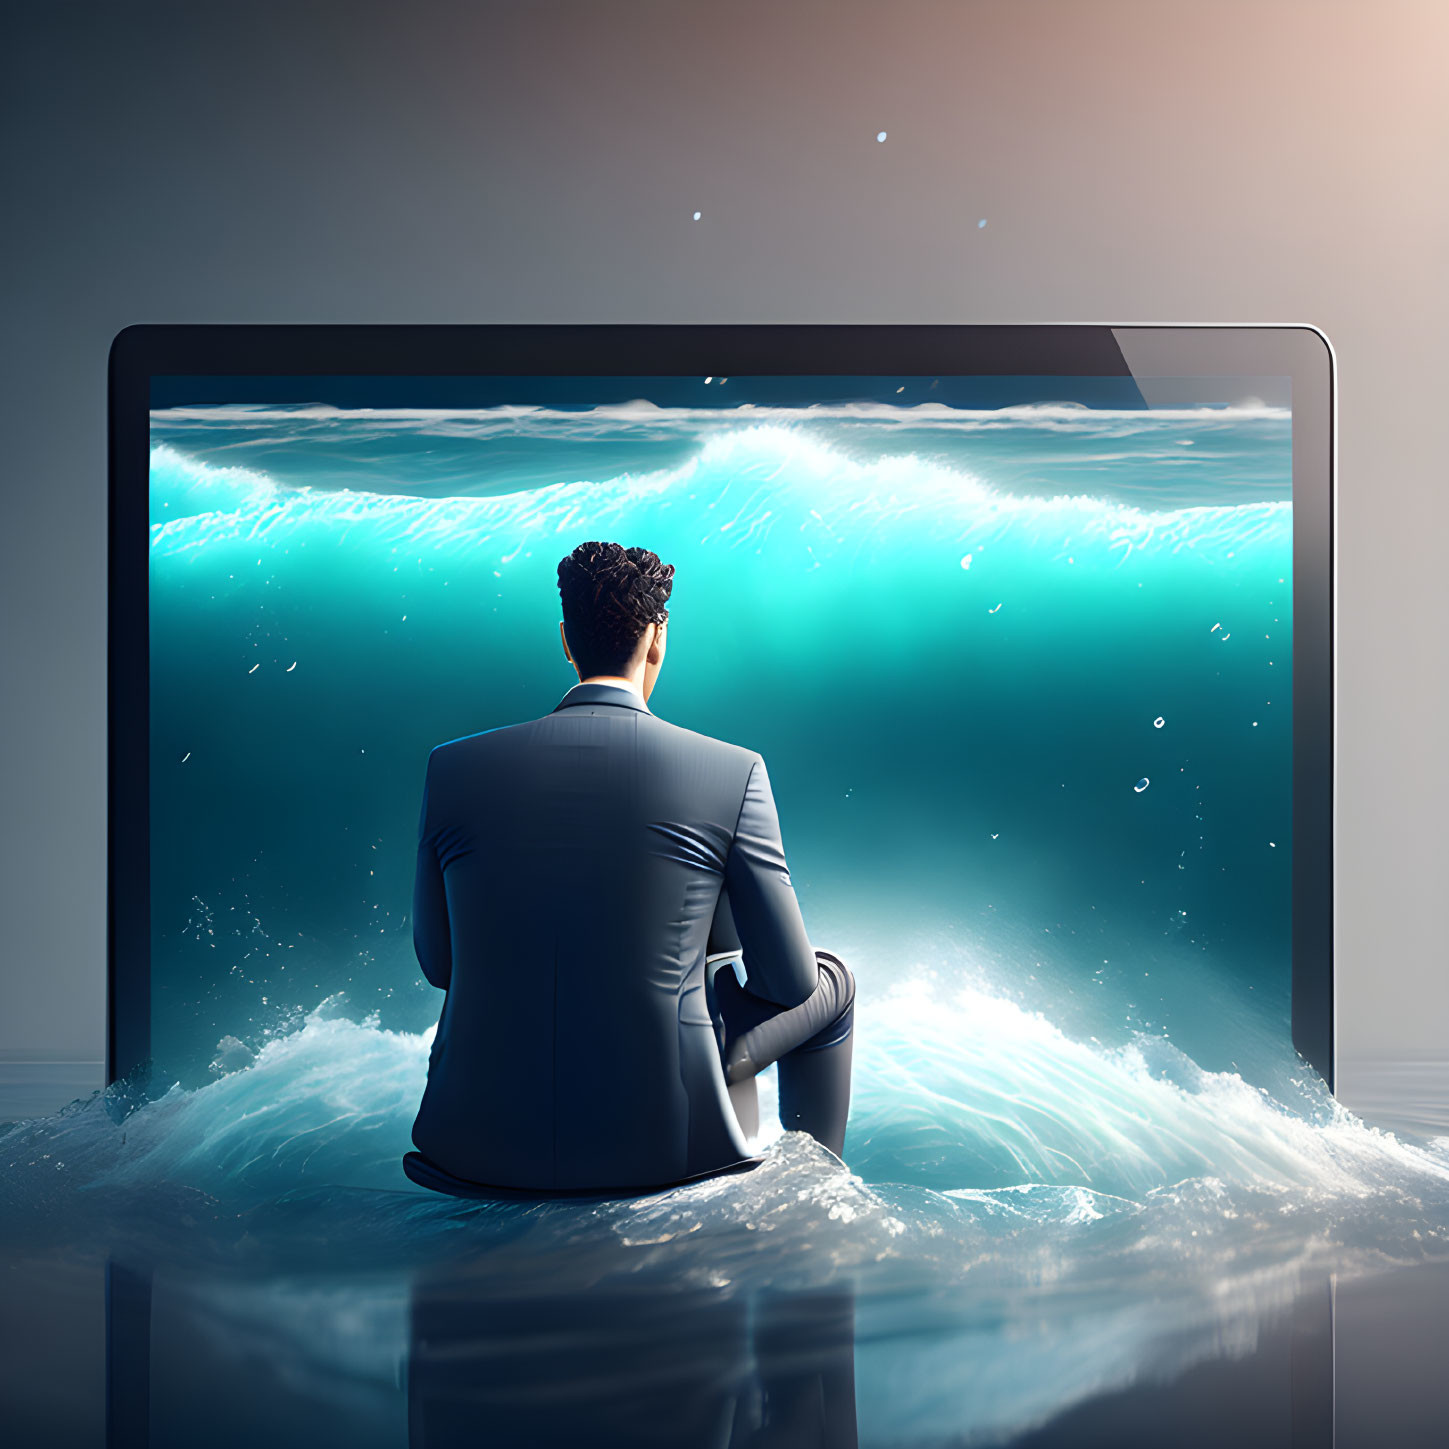 Man in suit sitting inside open laptop views underwater scene with bubbles.